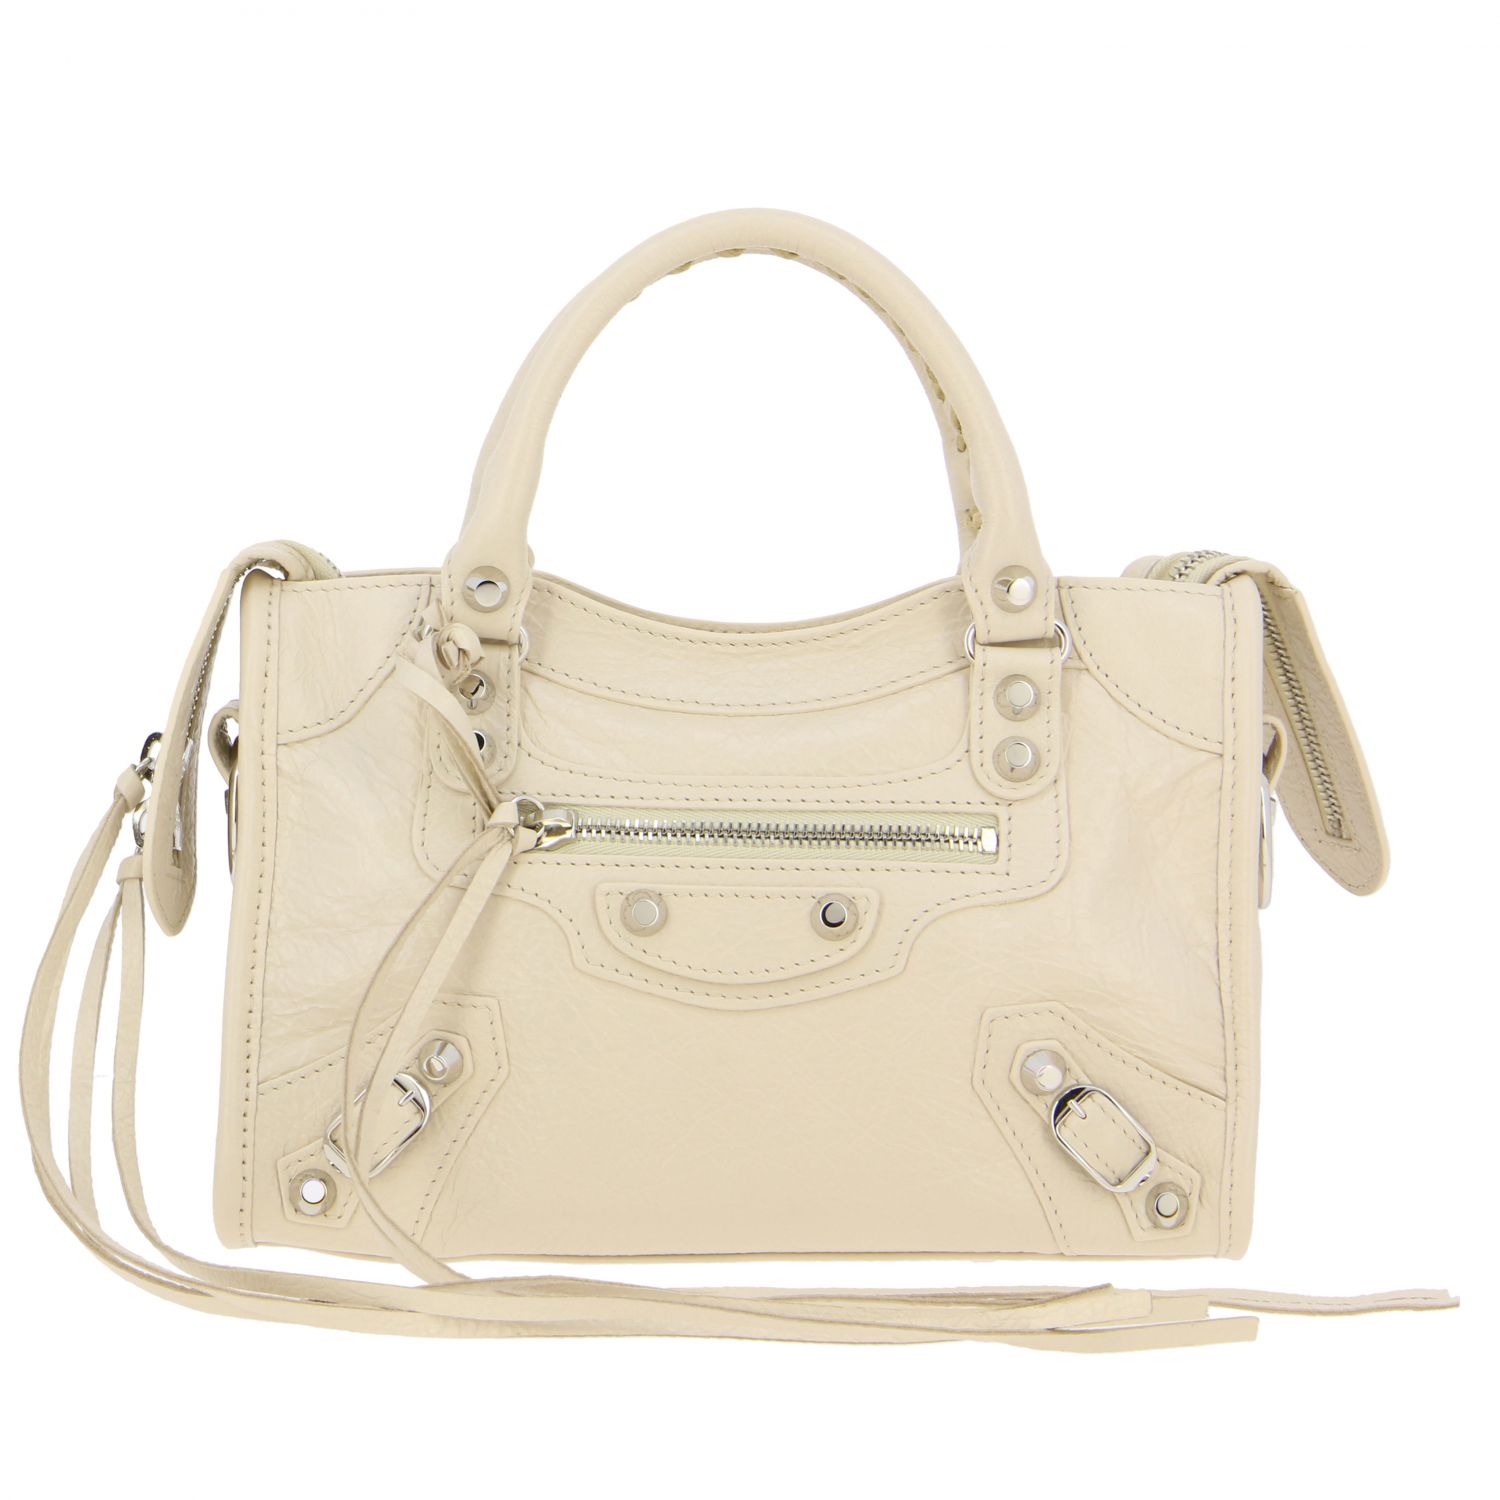 Balenciaga Outlet: City XS leather bag - Beige | Balenciaga mini bag DB5XN online on GIGLIO.COM